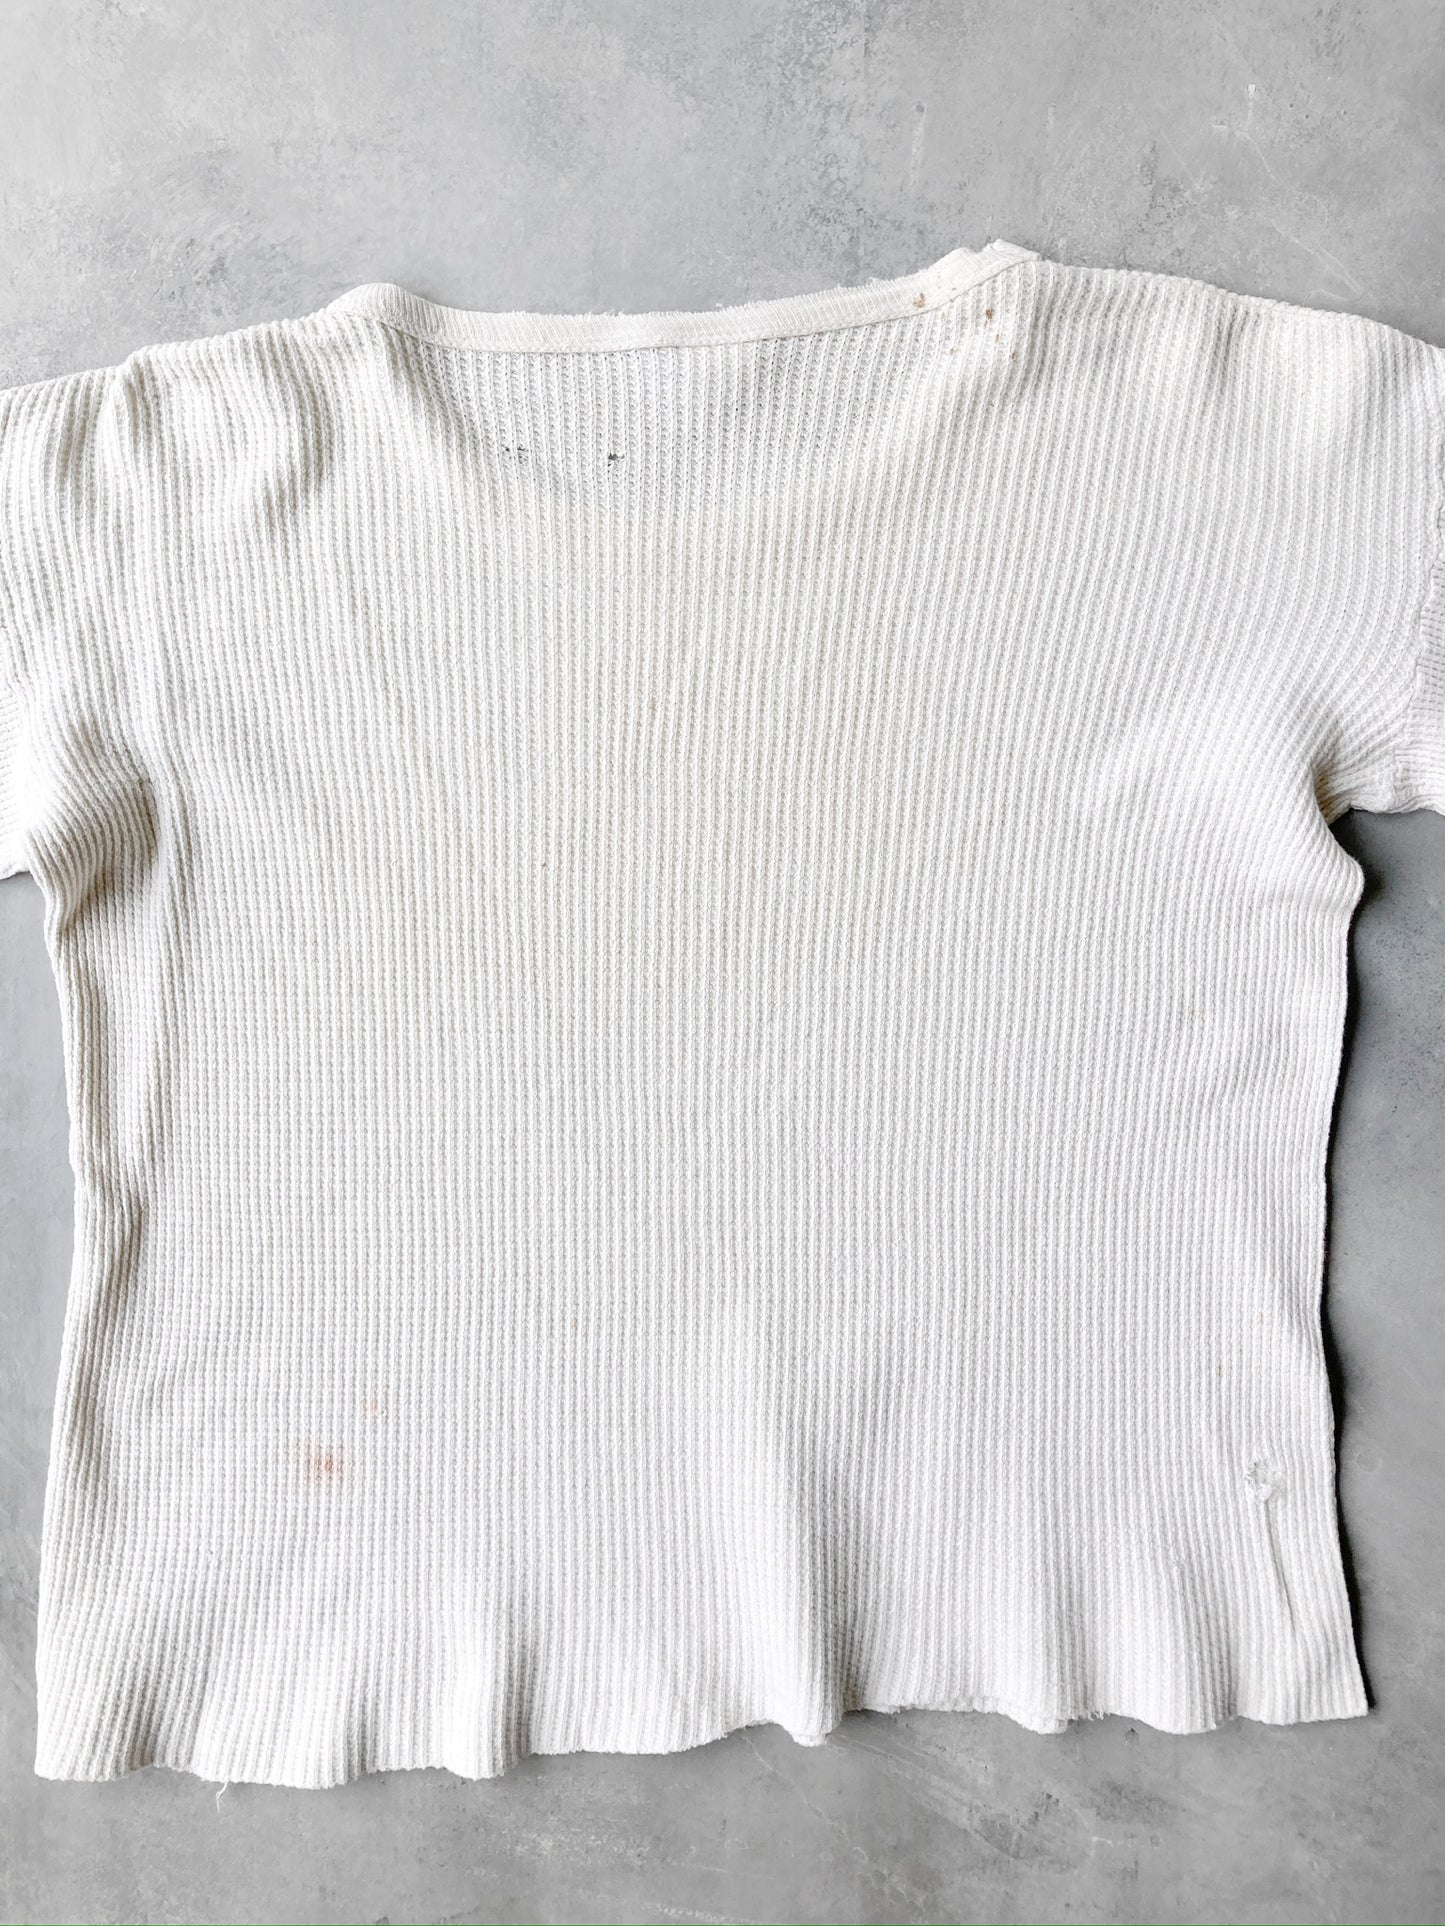 Distressed Thermal Shirt 80's - Medium / Large